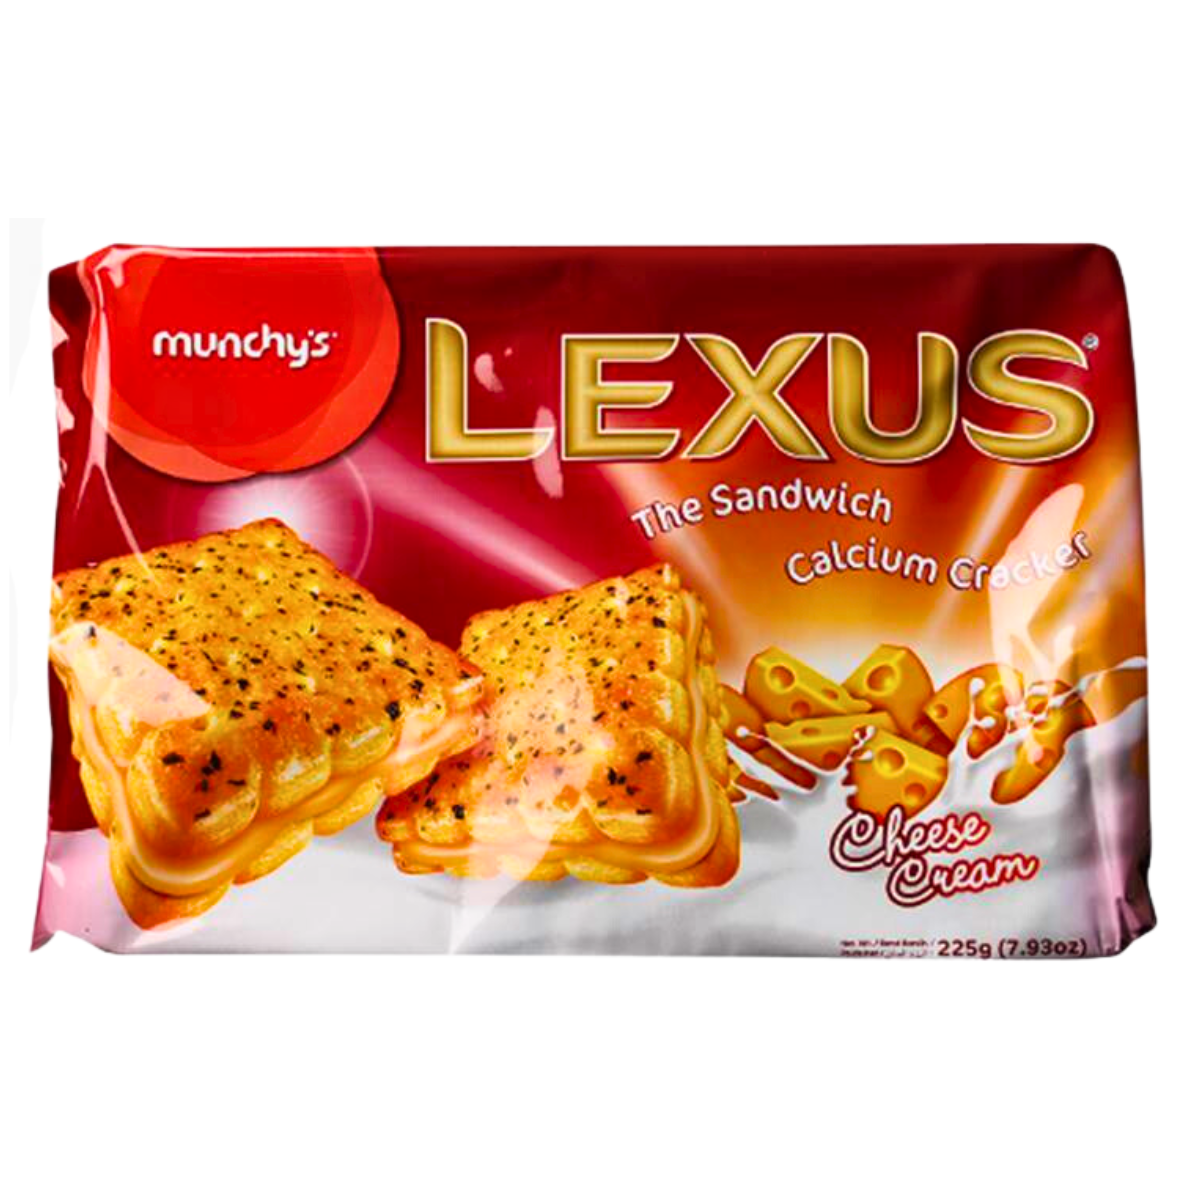 Munchys Lexus Cheese Cream Cookies 225g